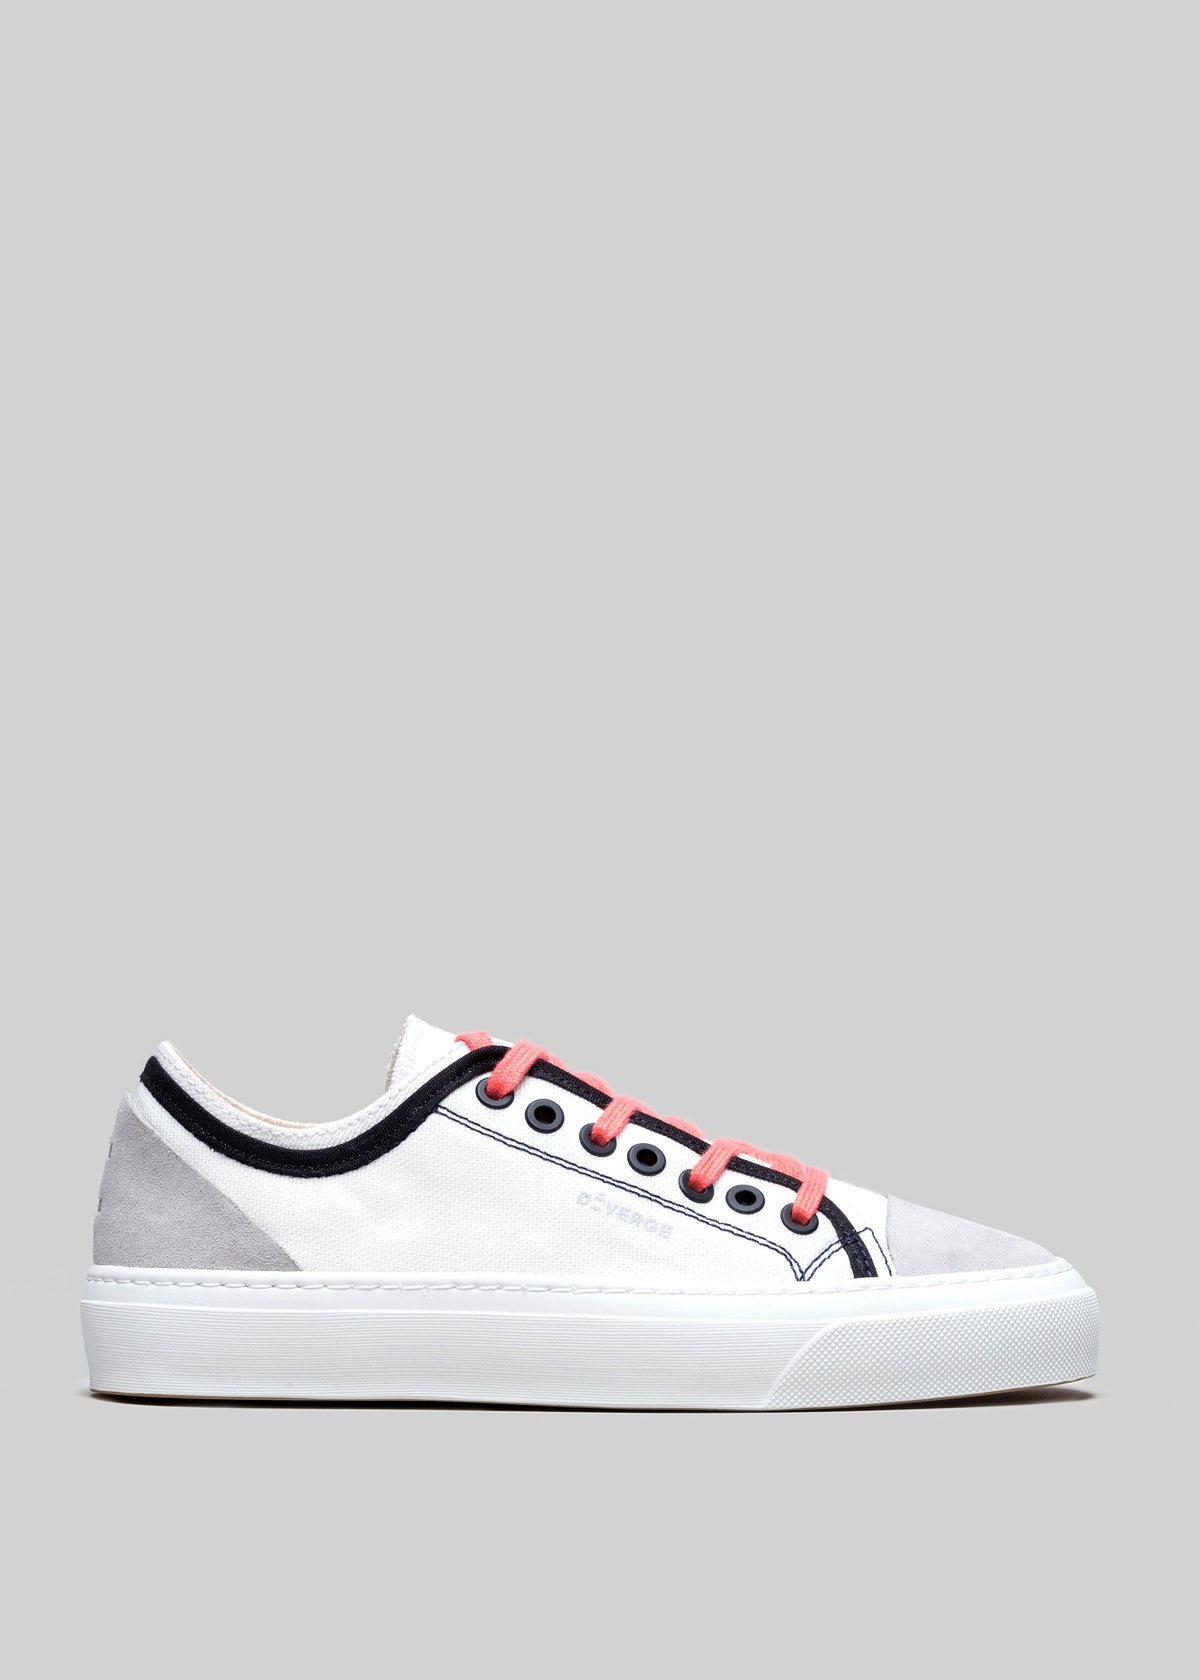 blanco y geranio lona premium multicapa baja sneakers sideview